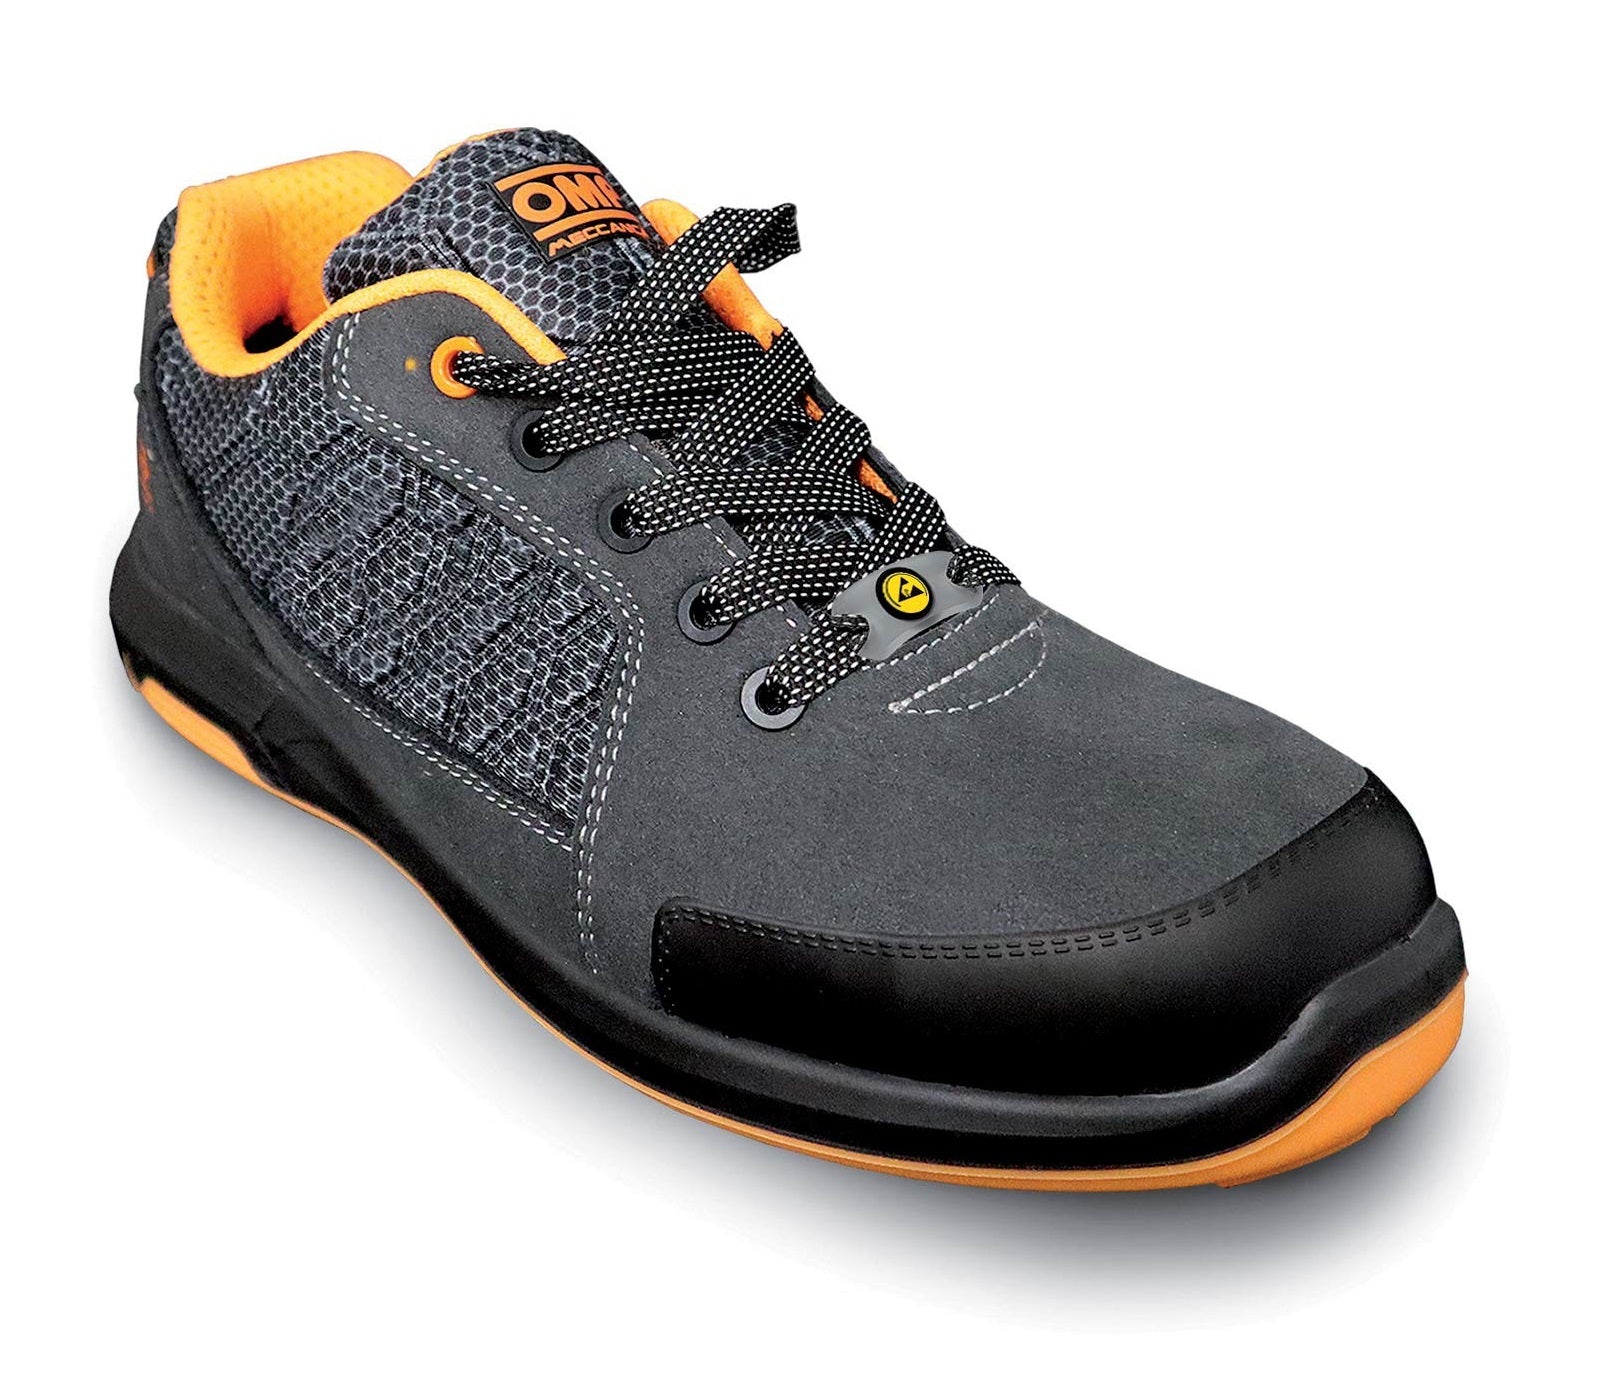 OMP OMPS90014820 Pro Sport Safety Mechanic's shoes, black/orange, size 48 Photo-0 